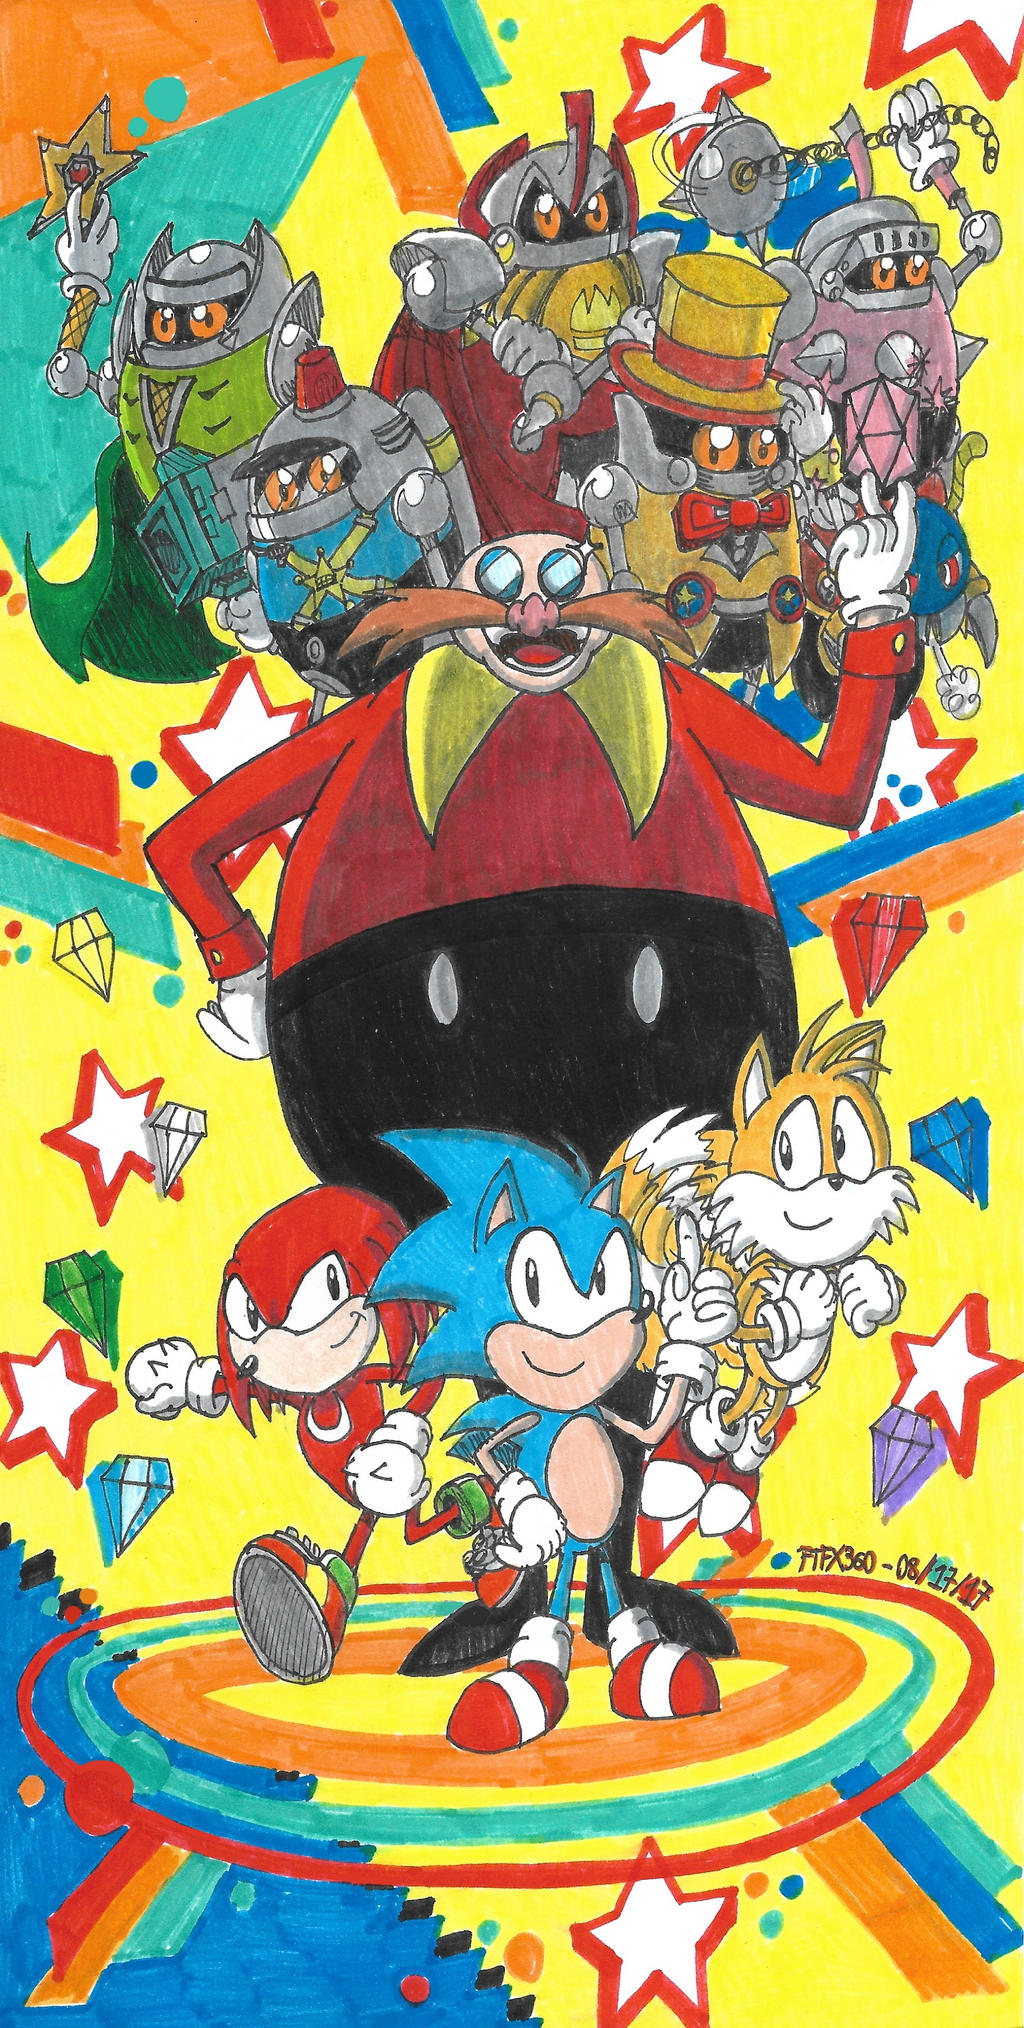 Sonic Mania on Game Gear by ClassicSonicSatAm on DeviantArt